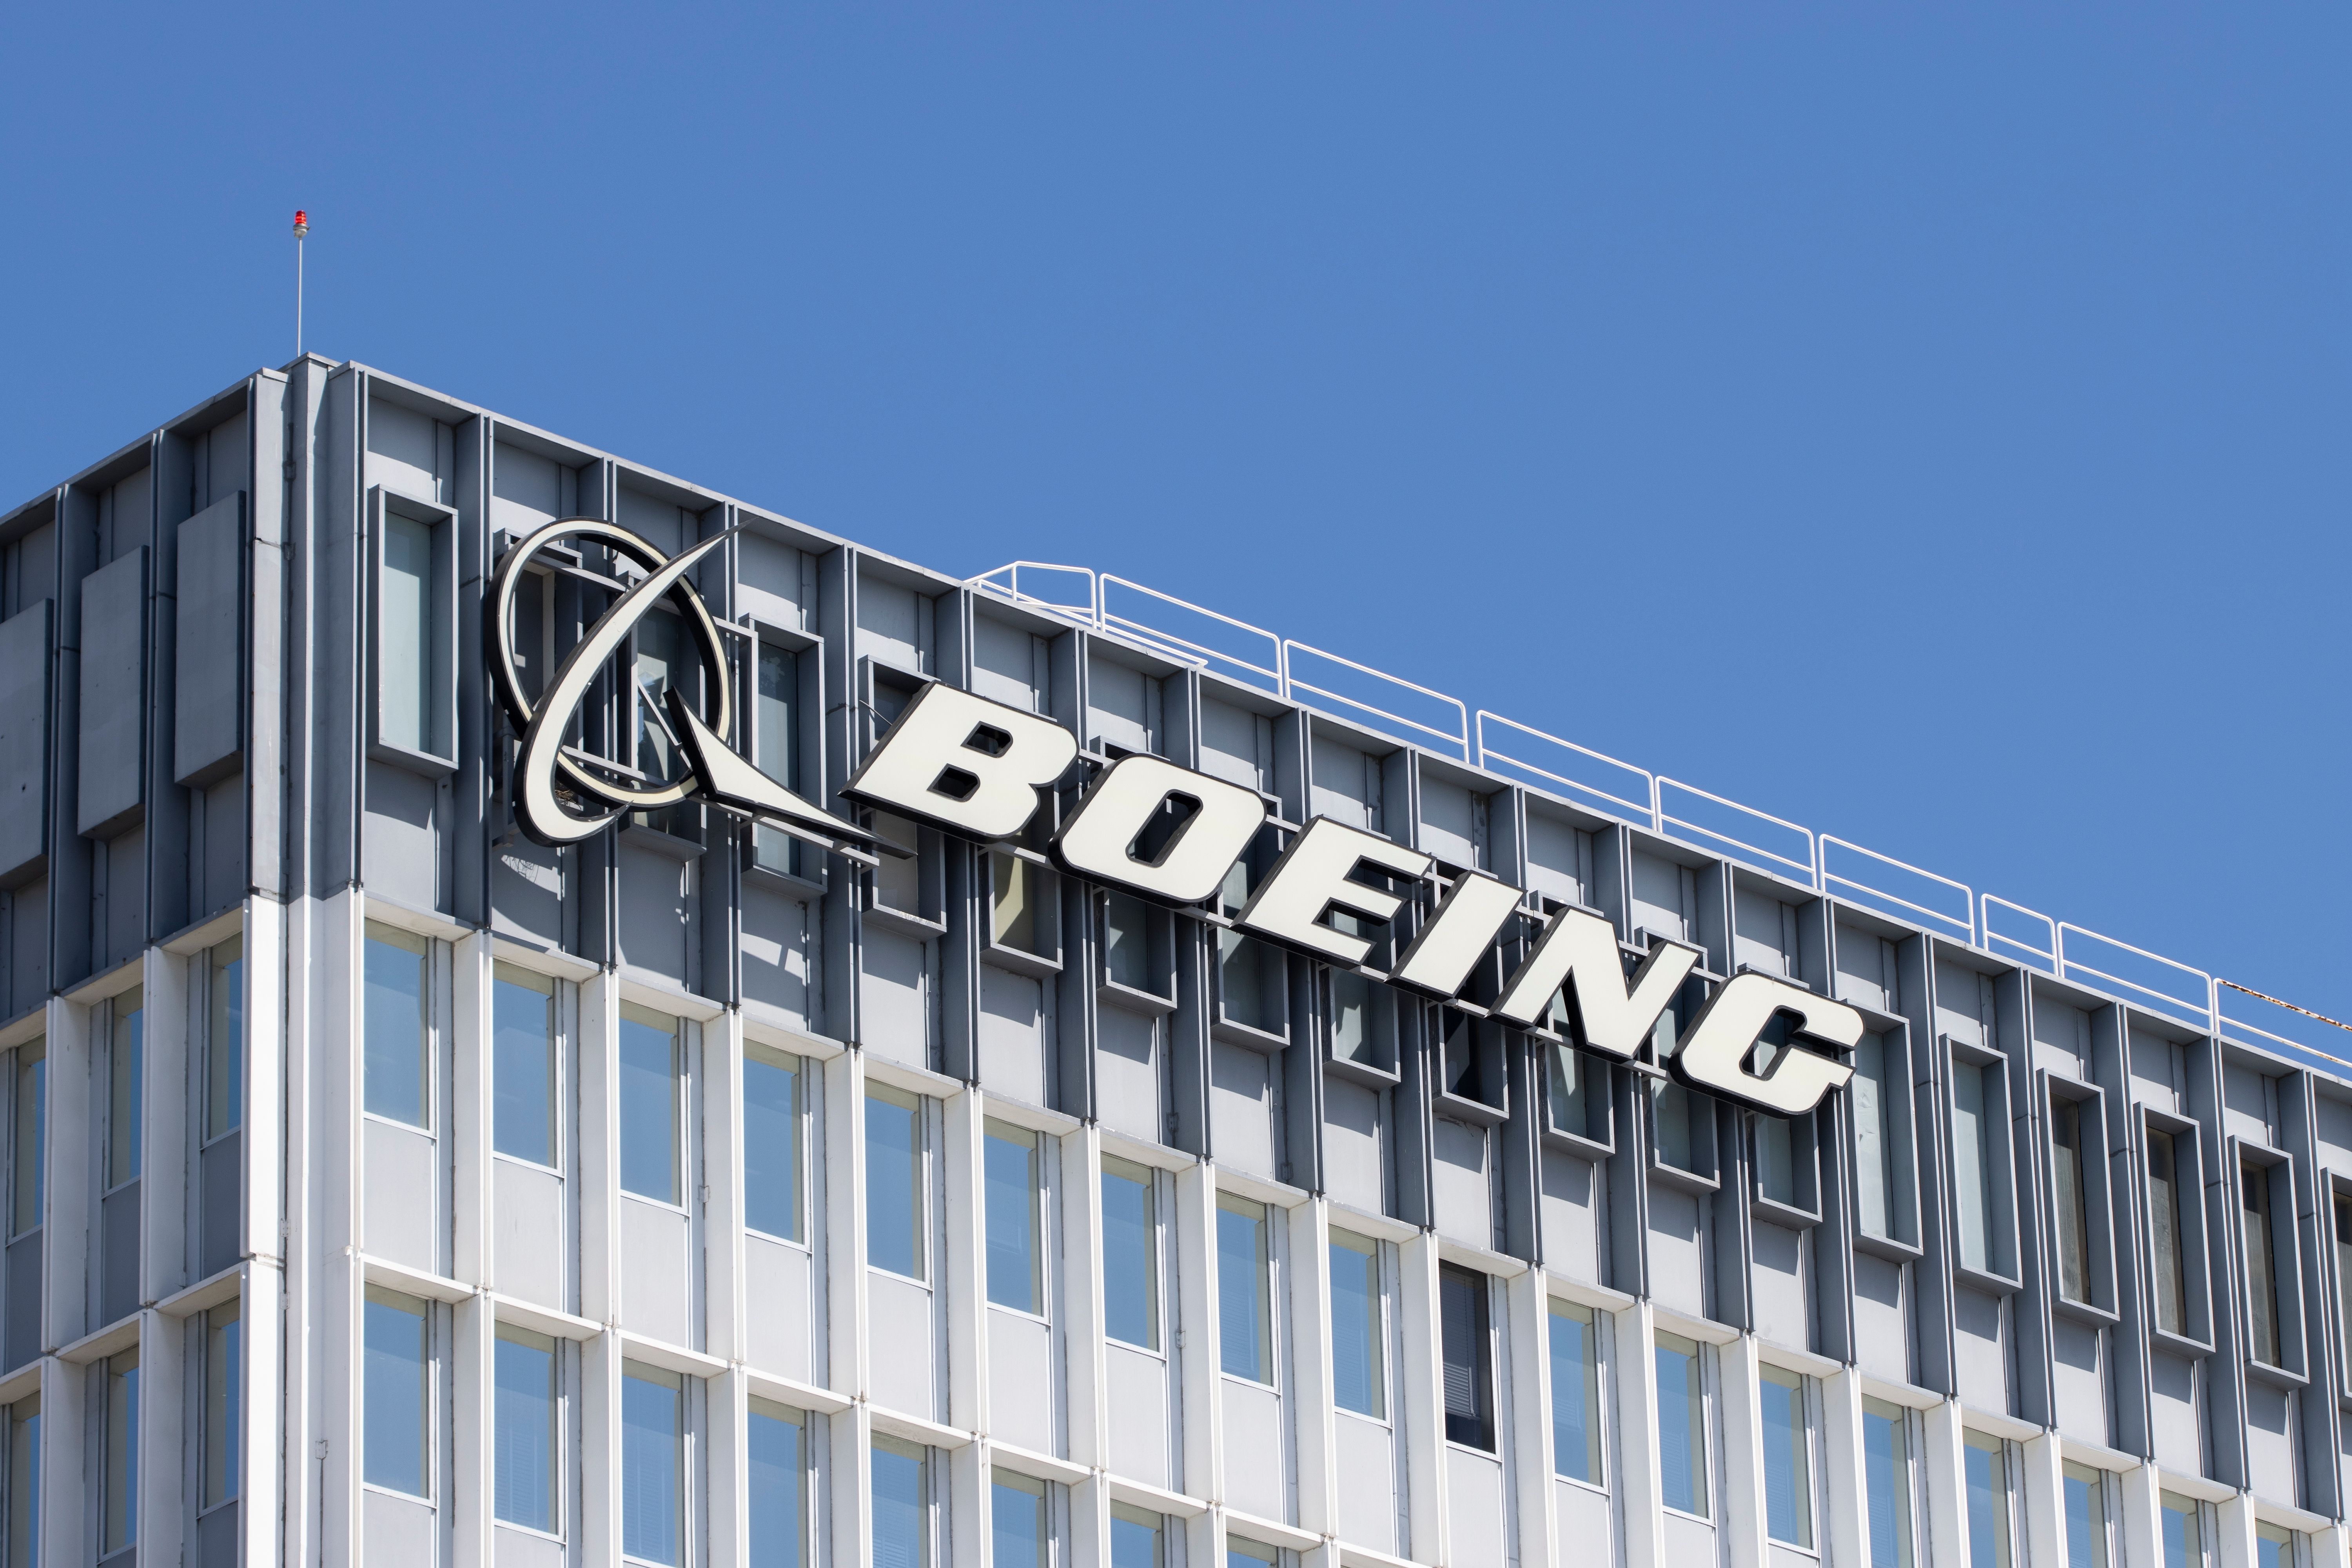 Boeing's logo in El Segundo, California